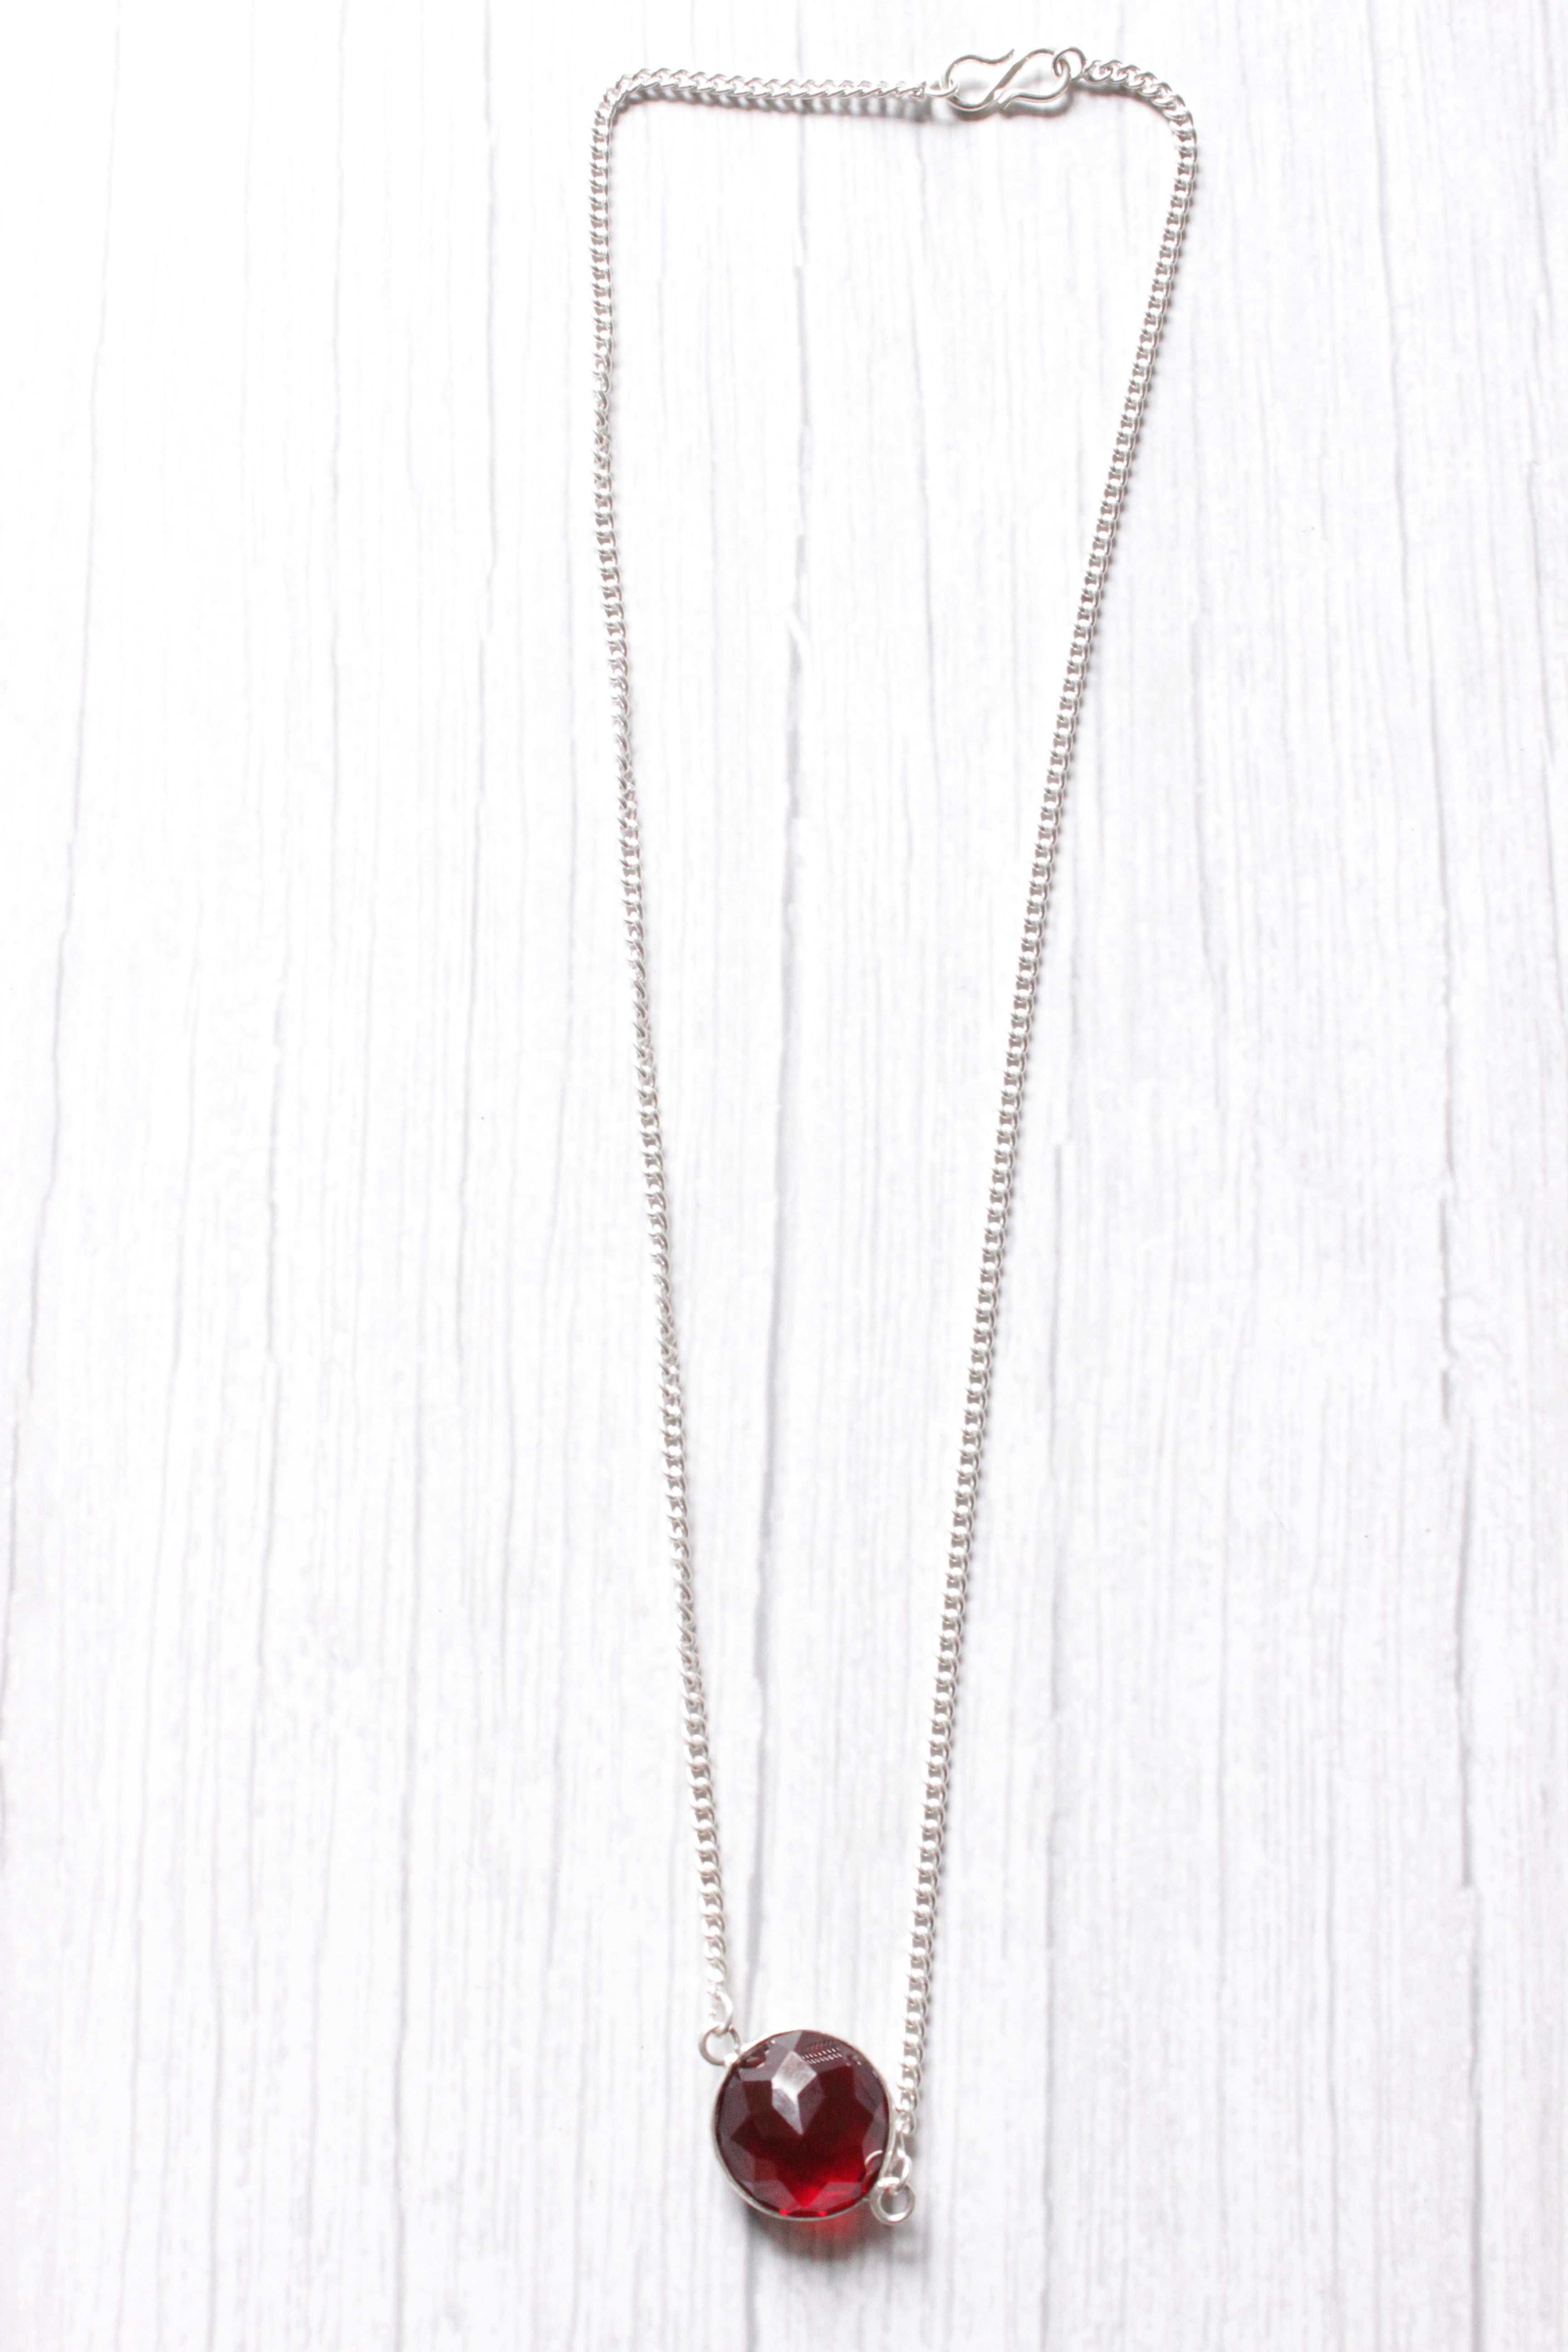 Faceted Garnet Quartz Natural Gemstone Embedded Silver Plated Necklace